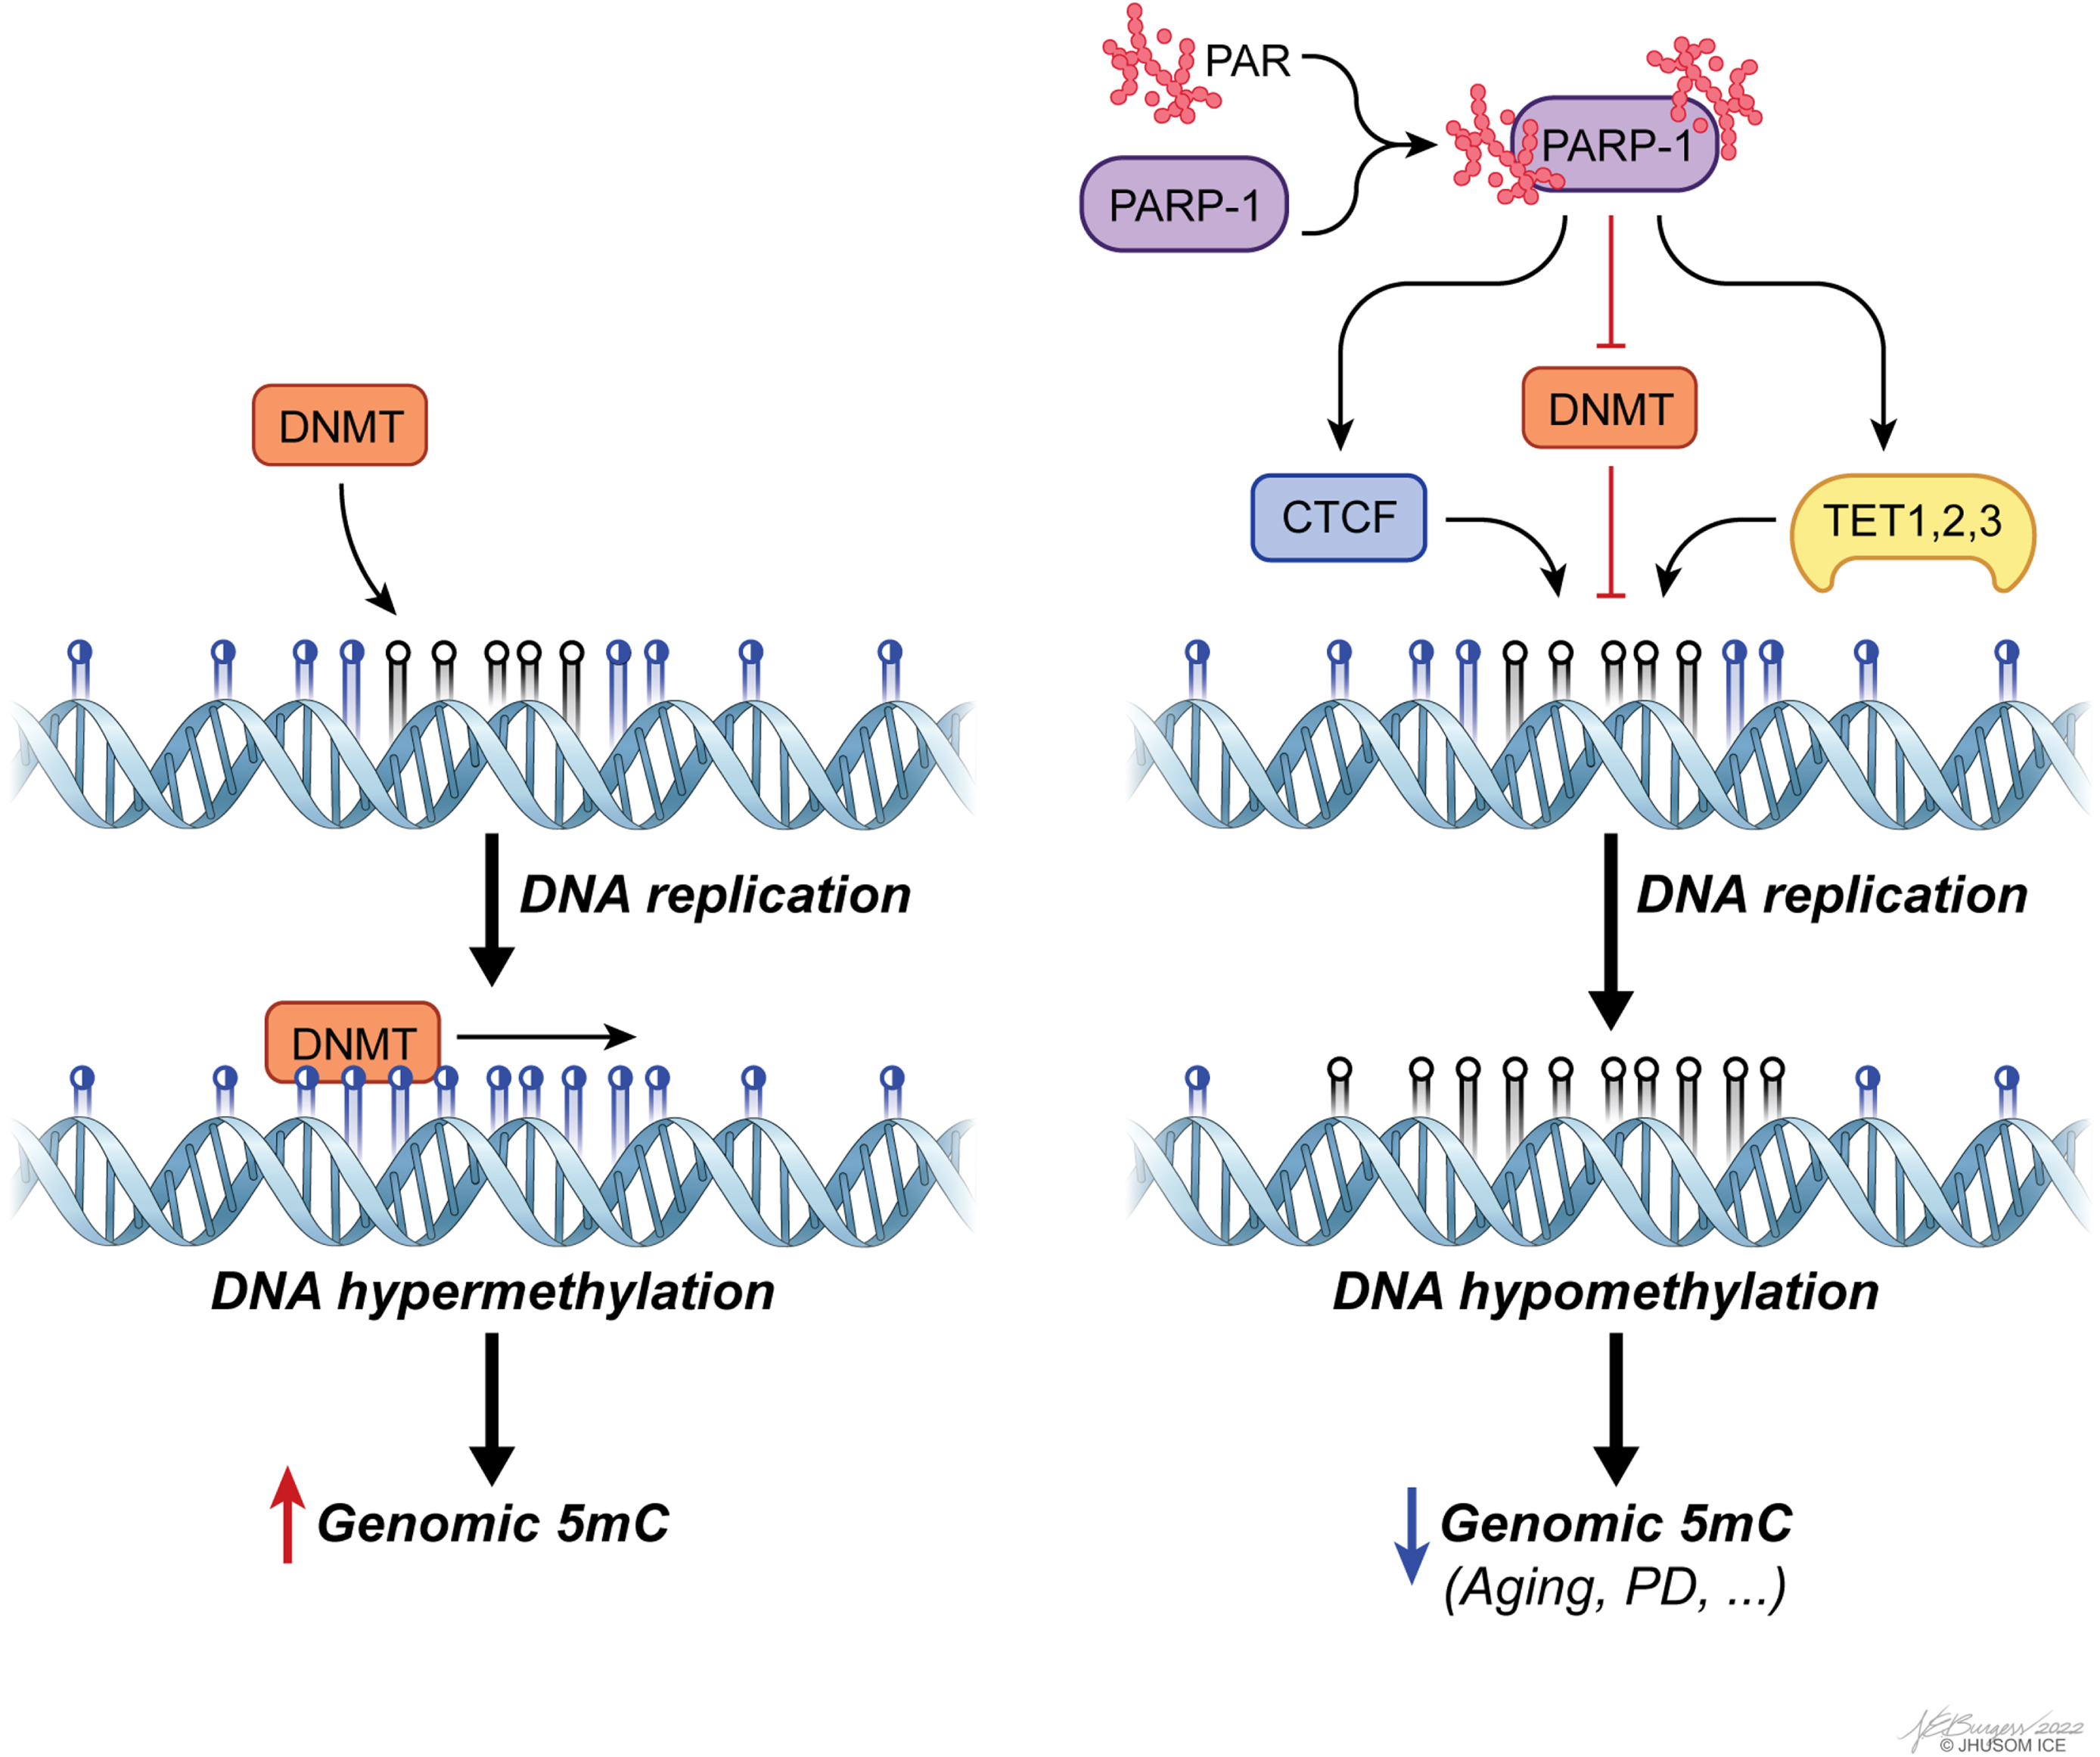 poly(ADP-ribosyl)ation (PARylation) of PAR polymerase 1 (PARP-1) is a major means of regulating genomic methylation patterns. PARylated PARP-1 acts on a set of epigenetics regulators, including CTCF, DNMTs, and TETs, to induce DNA hypomethylation.